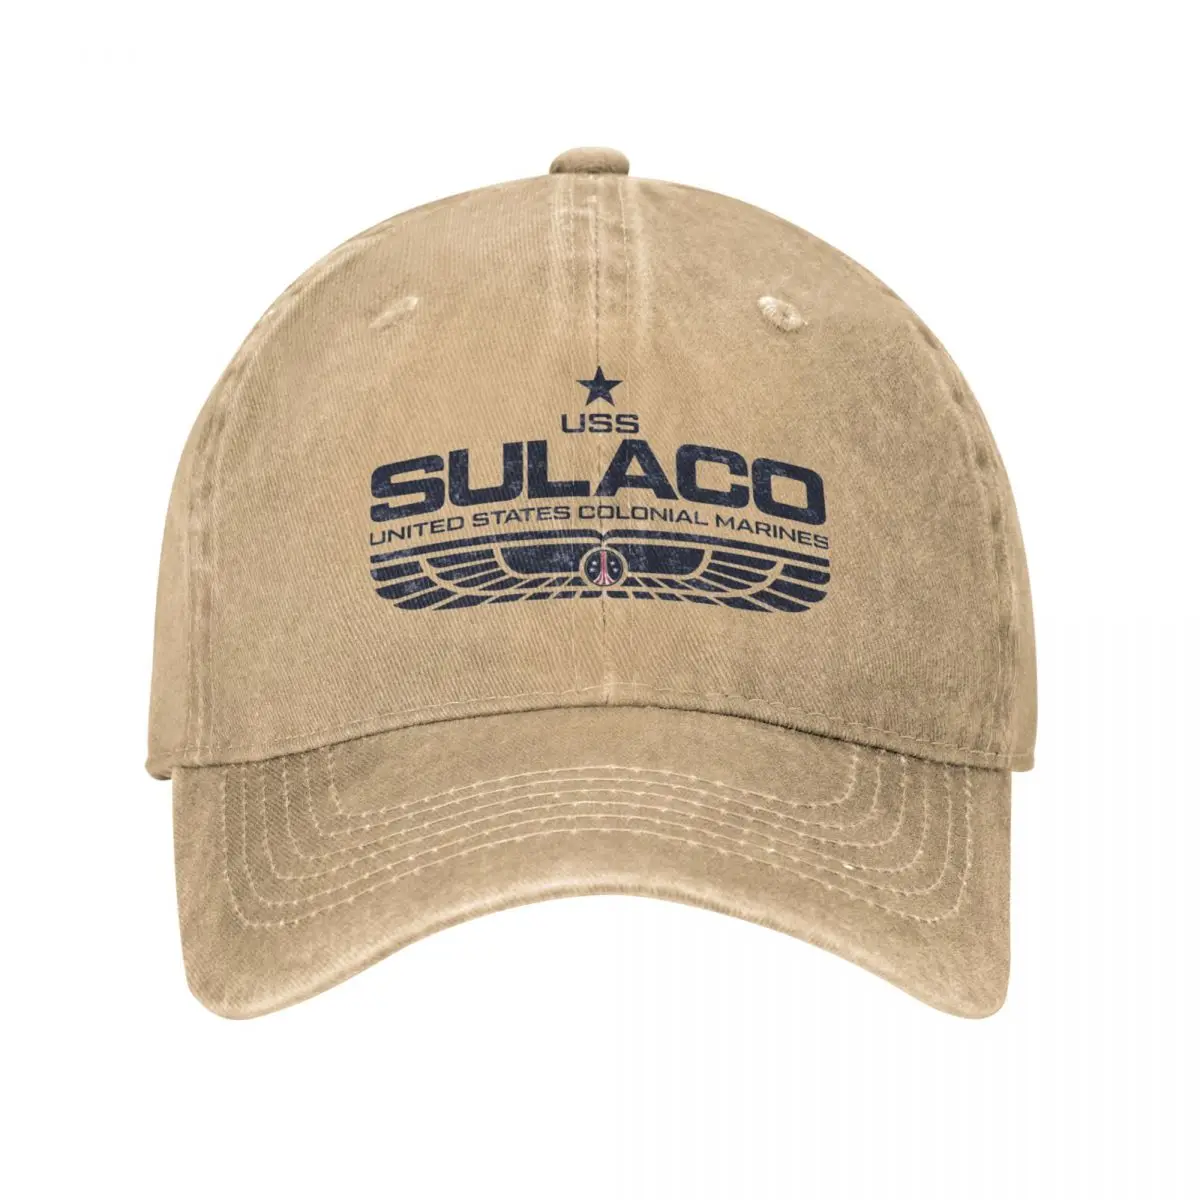 

Sulaco 2 USS Unisex Baseball Caps Alien Weyland Yutani Distressed Cotton Hats Cap Casual Outdoor Summer Gift Snapback Hat